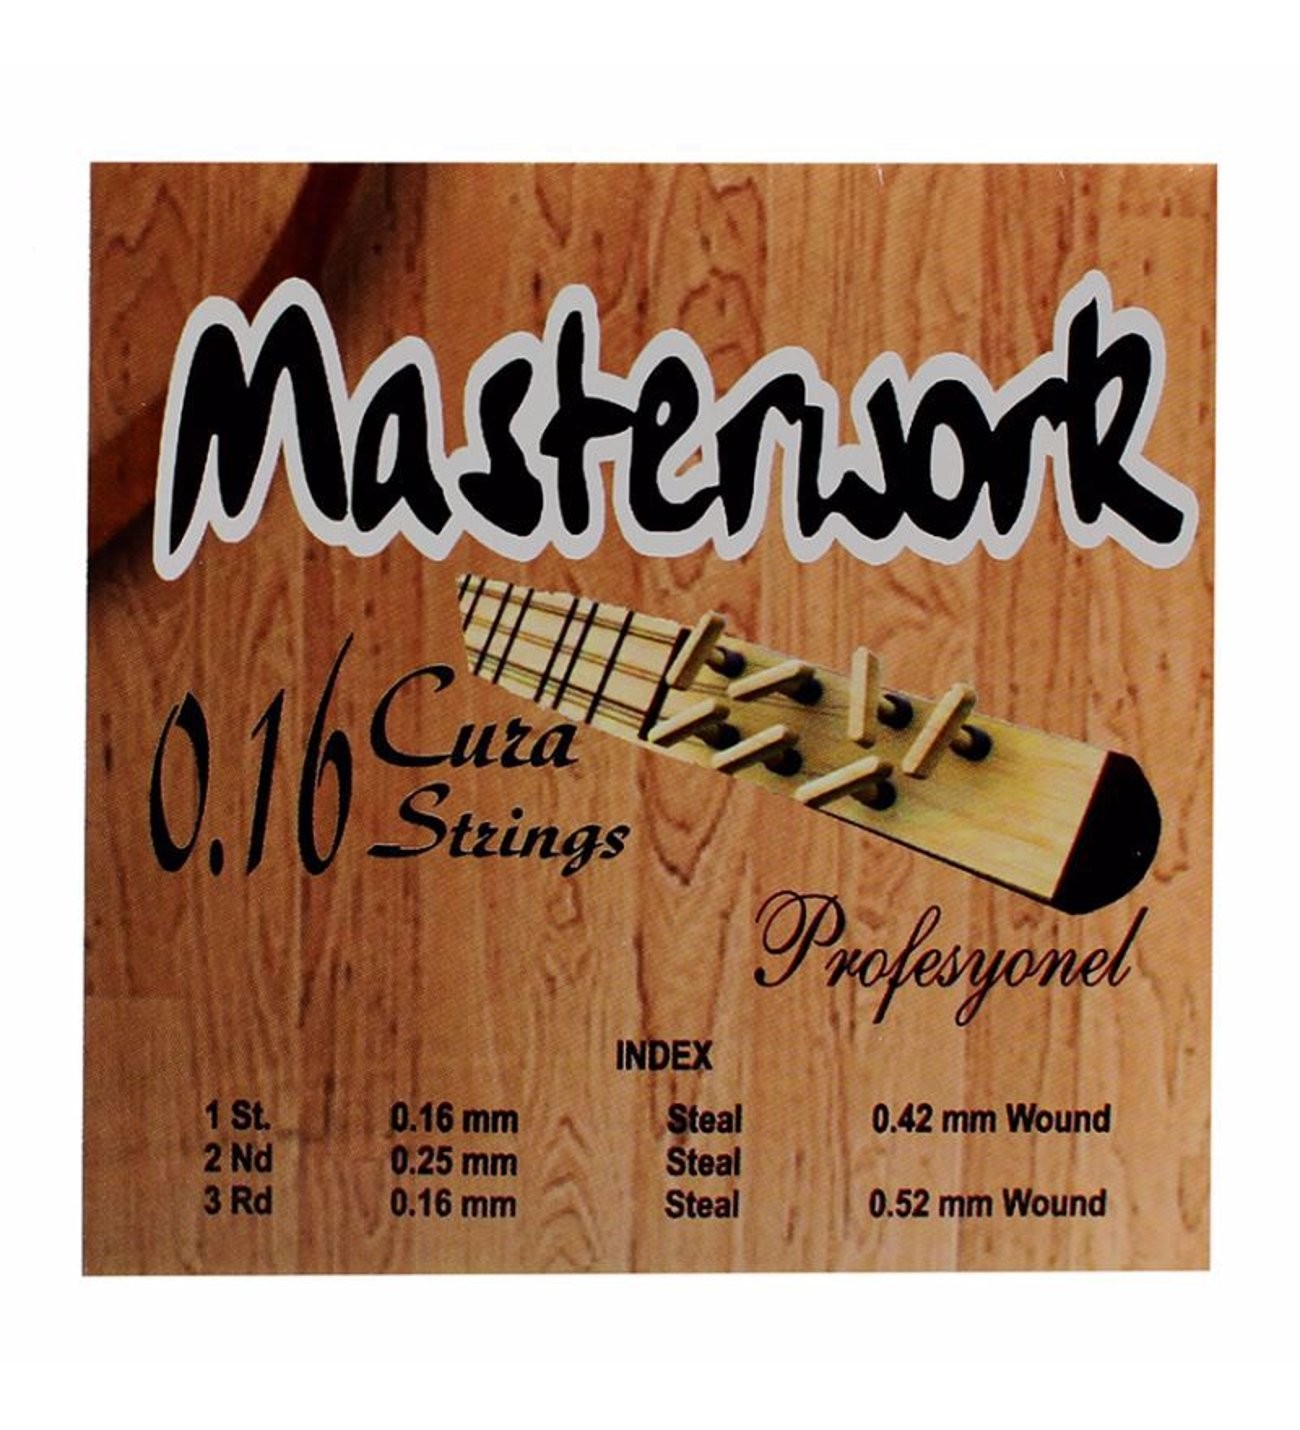 Masterwork Professional 0.16 Cura Wire